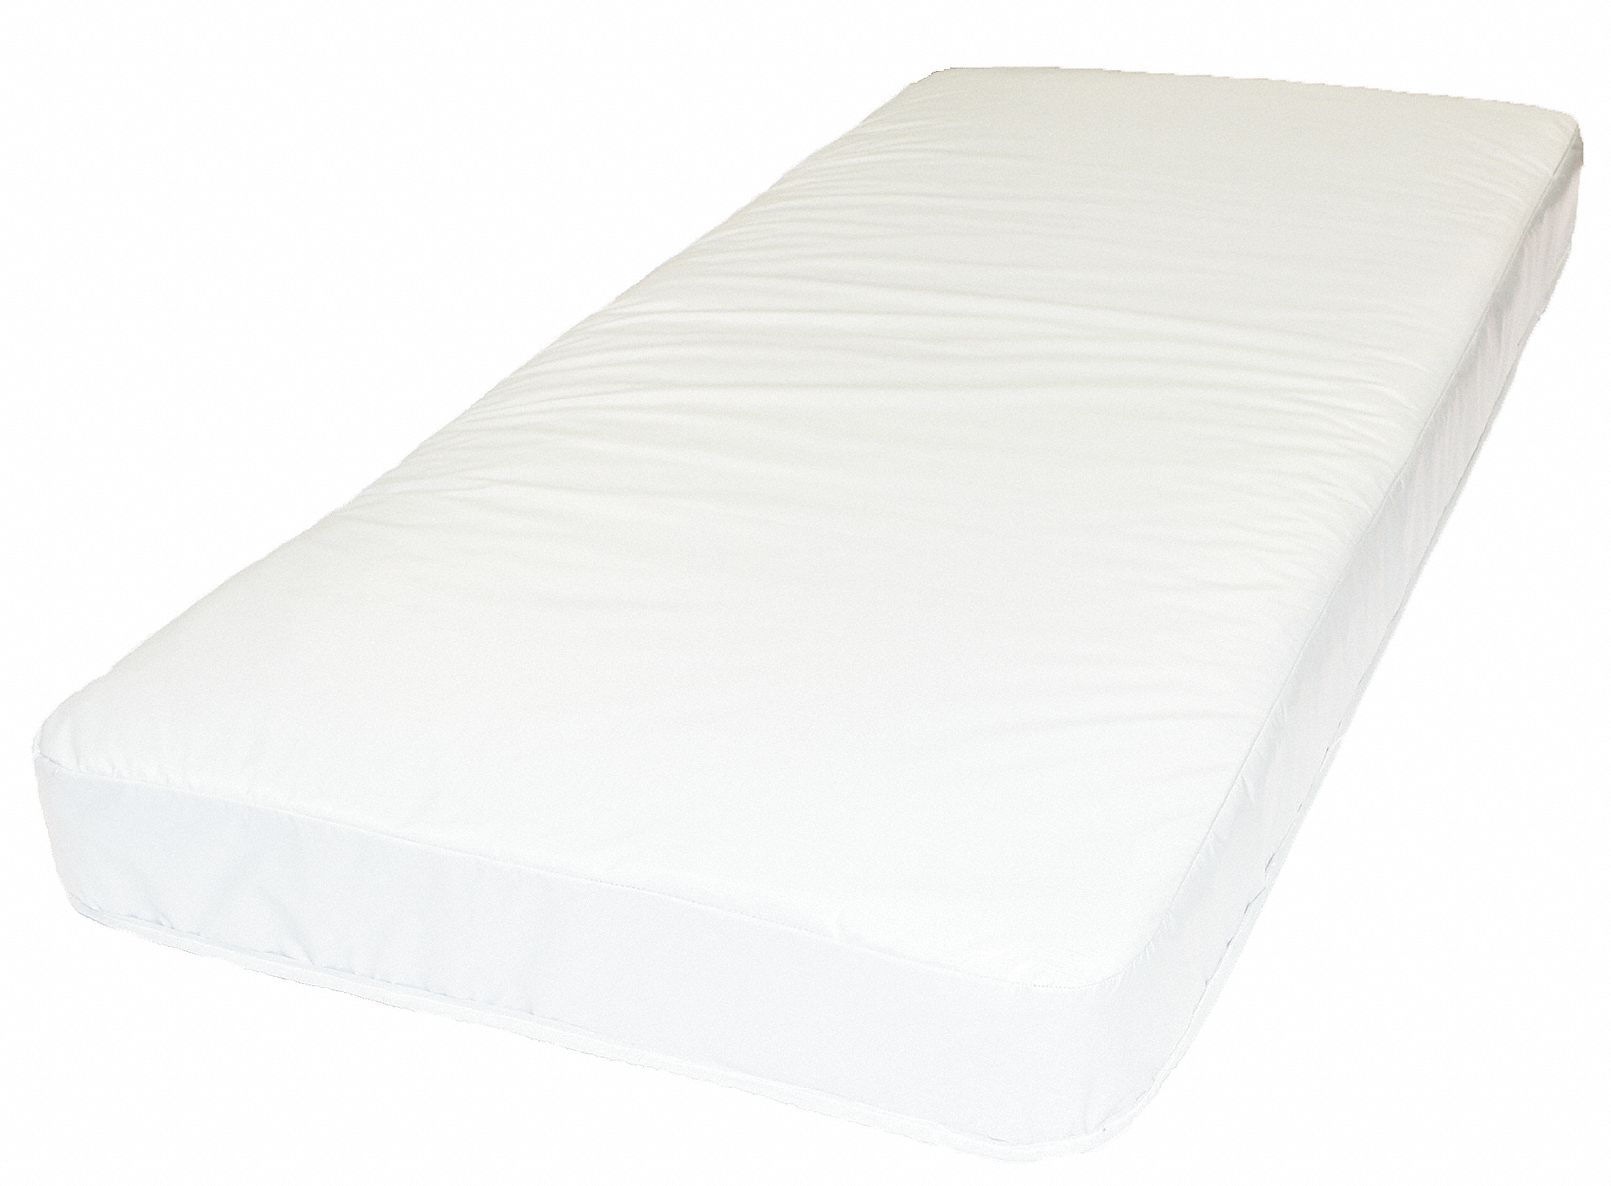 30 inch mattress cover